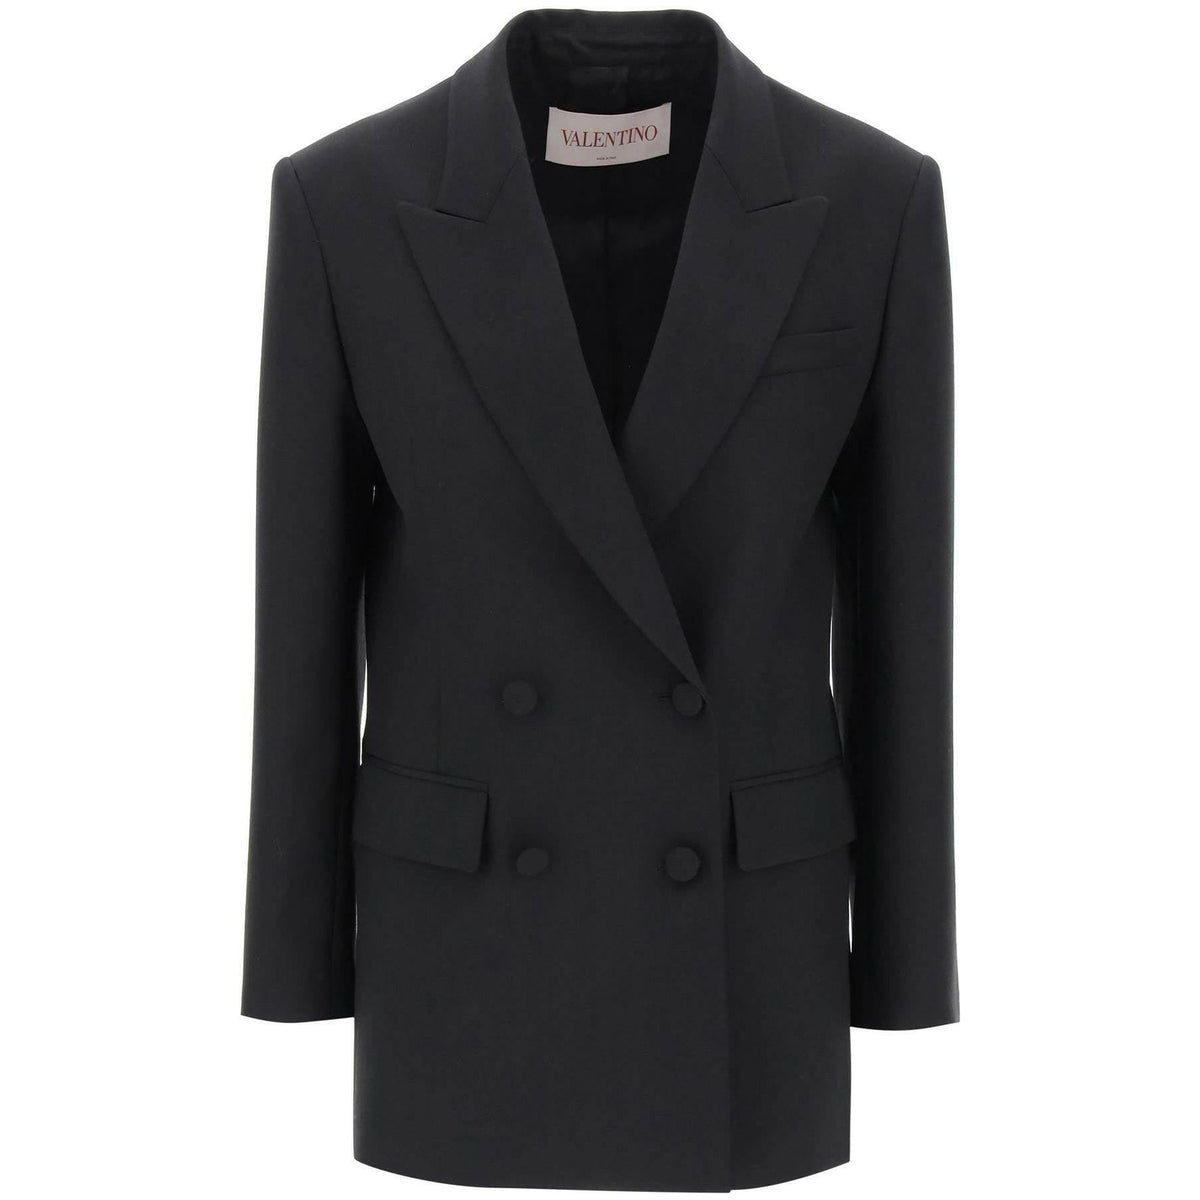 VALENTINO GARAVANI - Black Tailored Double-Breasted Wool Jacket - JOHN JULIA